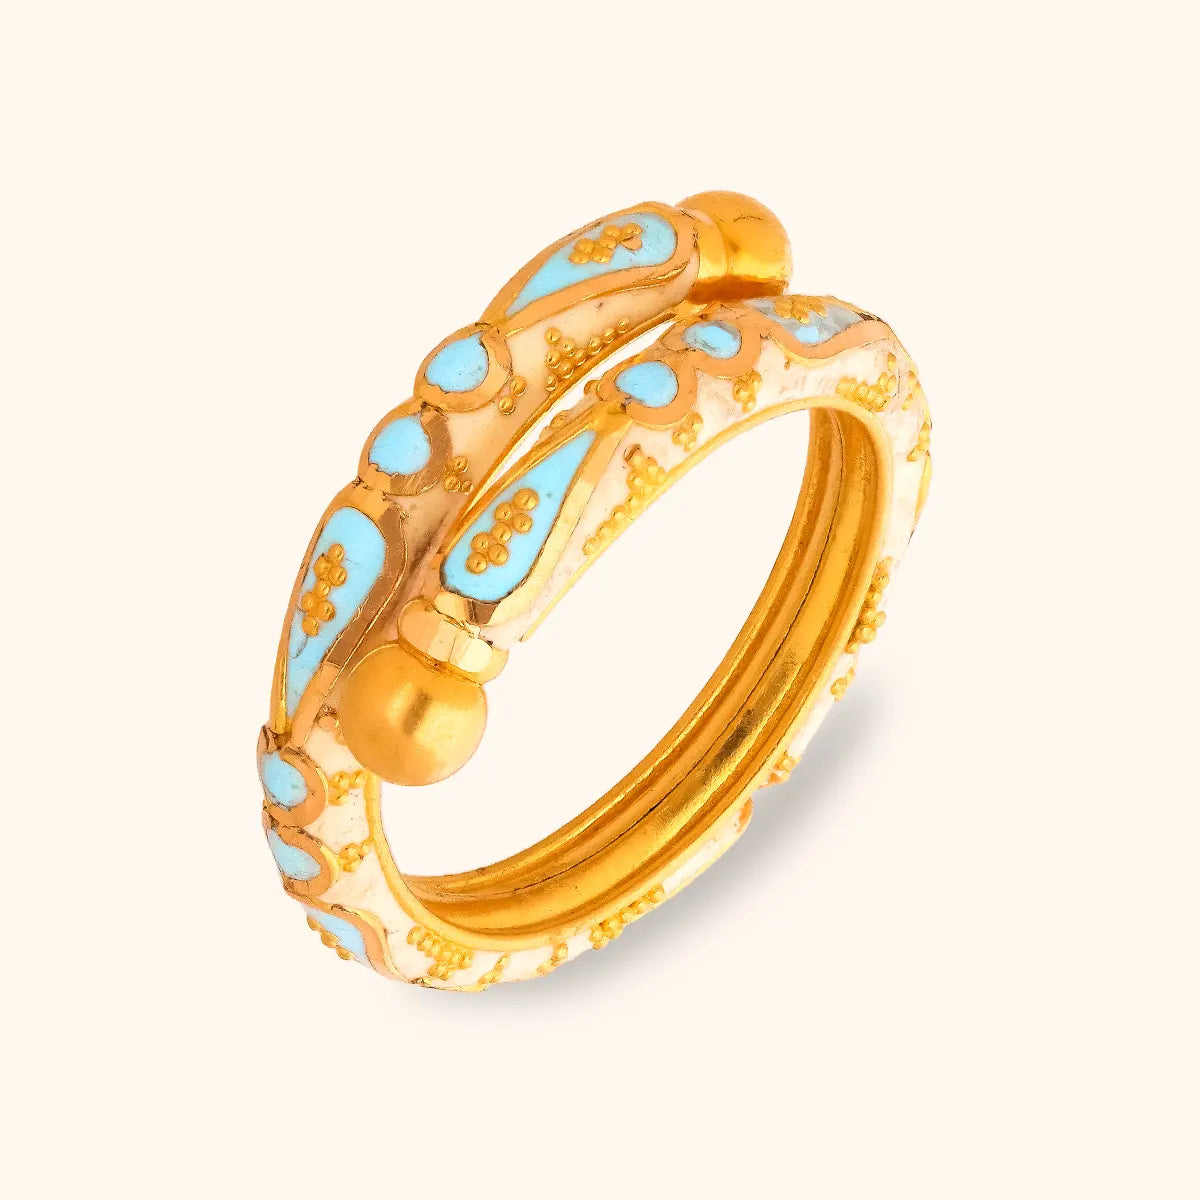 Senco Gold 22k (916) Yellow Gold Ring for Women : Amazon.in: Jewellery